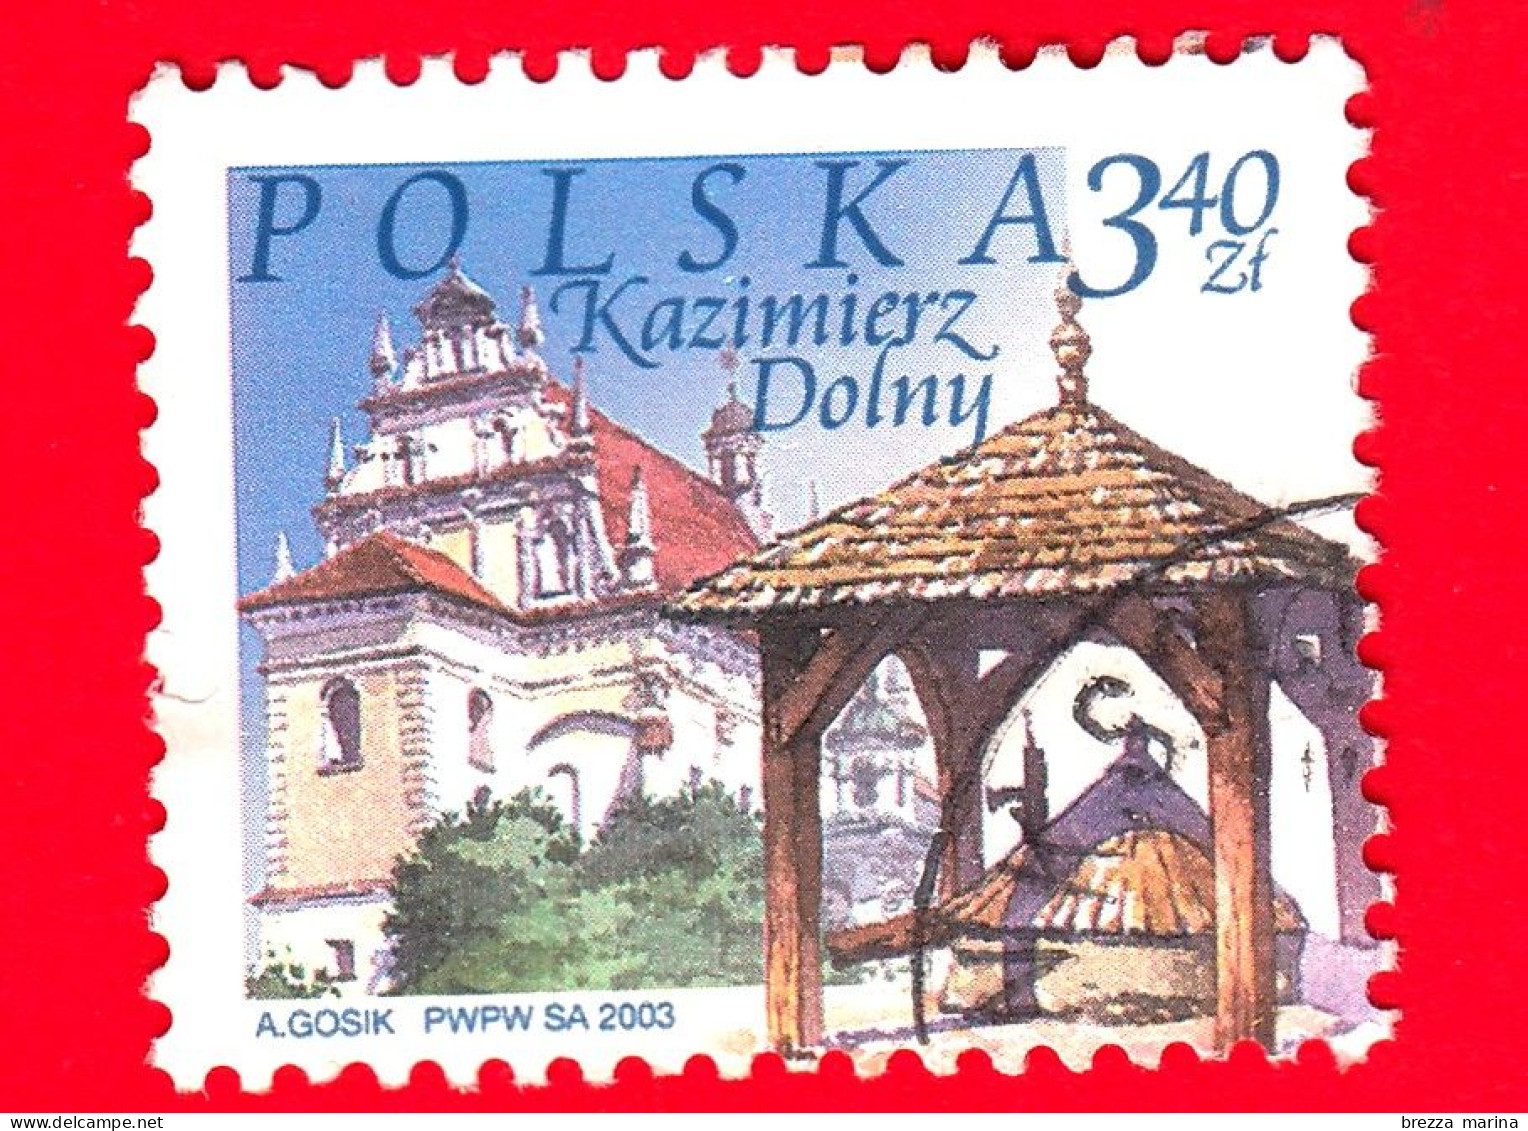 POLONIA - Usato - 2003 - Luoghi D'interesse Di Città Polacche - Chiesa E Pozzo, Kazimierz Dolny - 3.40 - Oblitérés